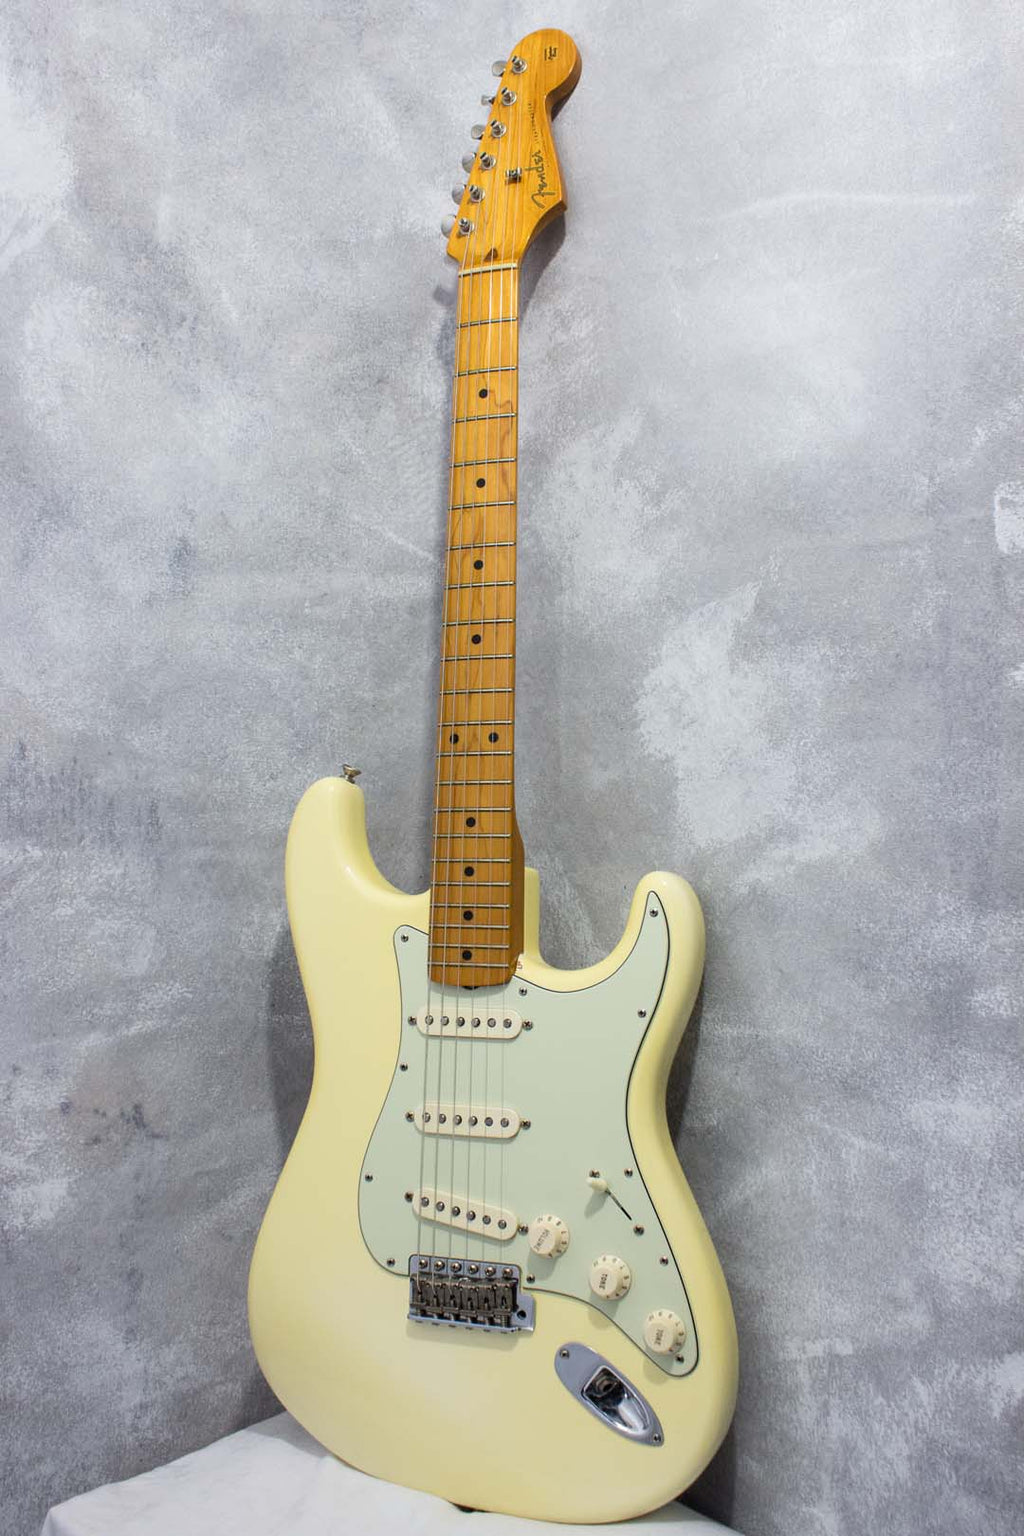 Fender American Vintage '62/54 Stratocaster Olympic White 2008